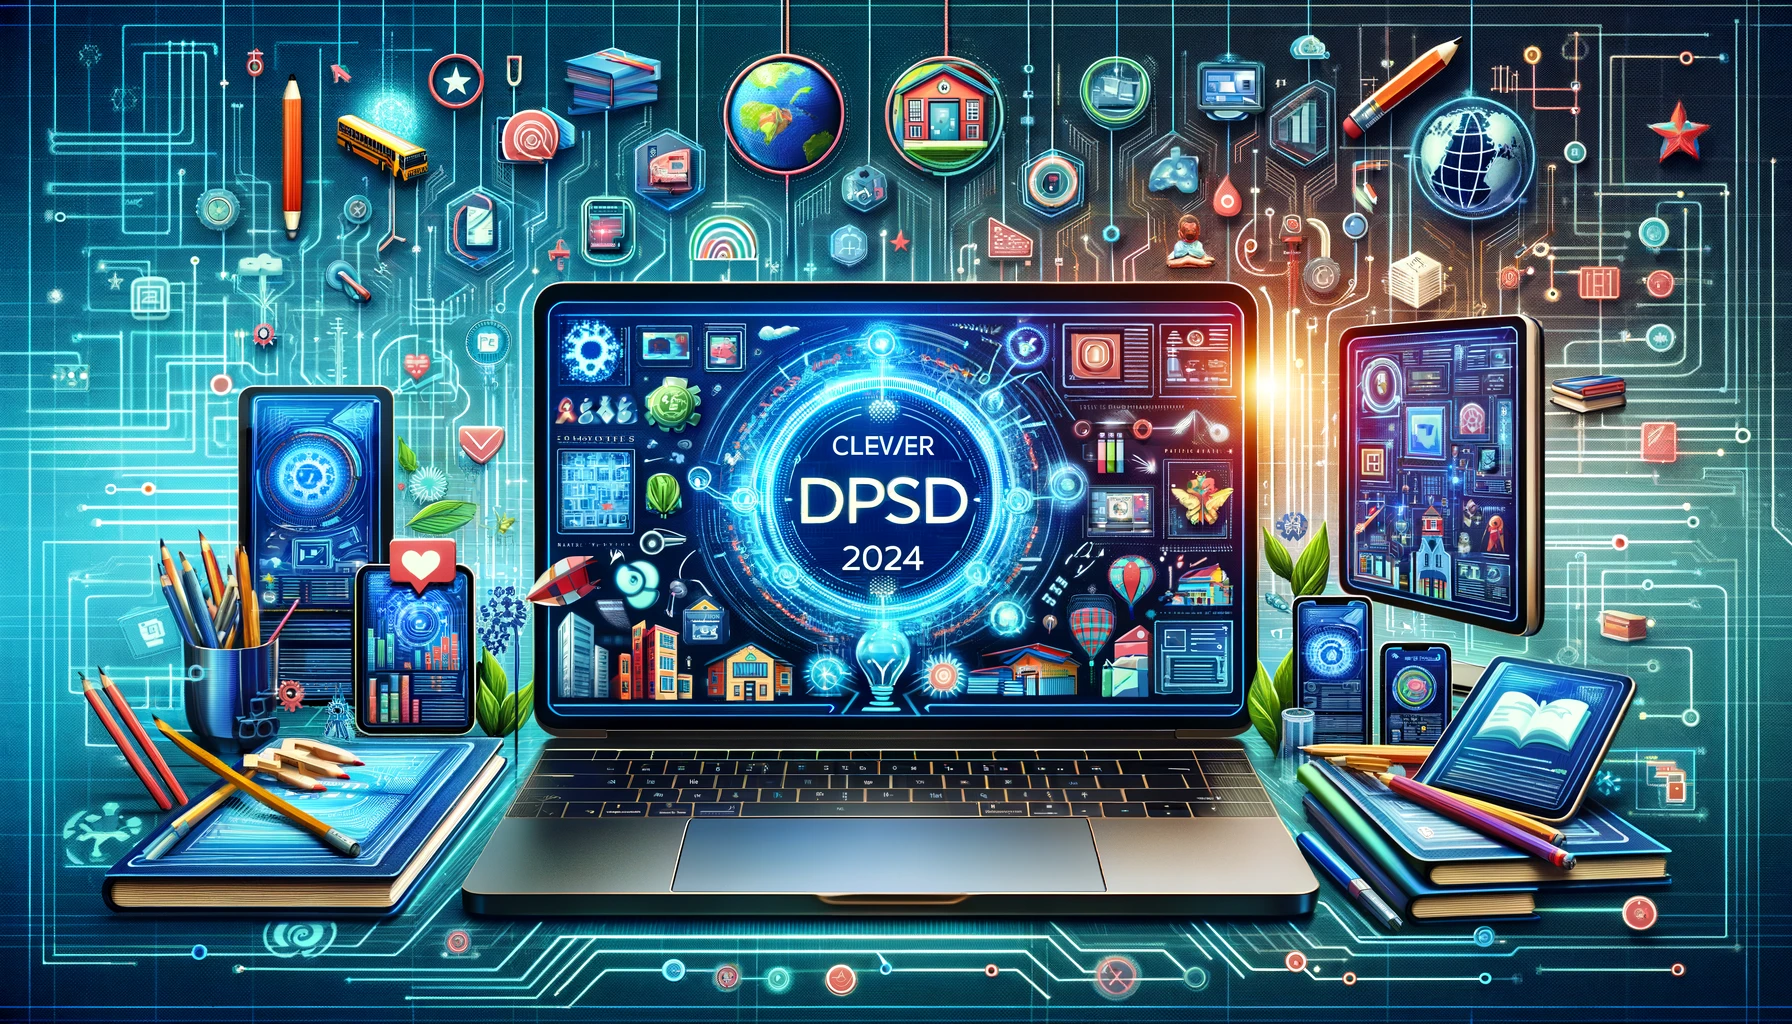 Clever DPSCD: Revolutionize Online learning in School 2024